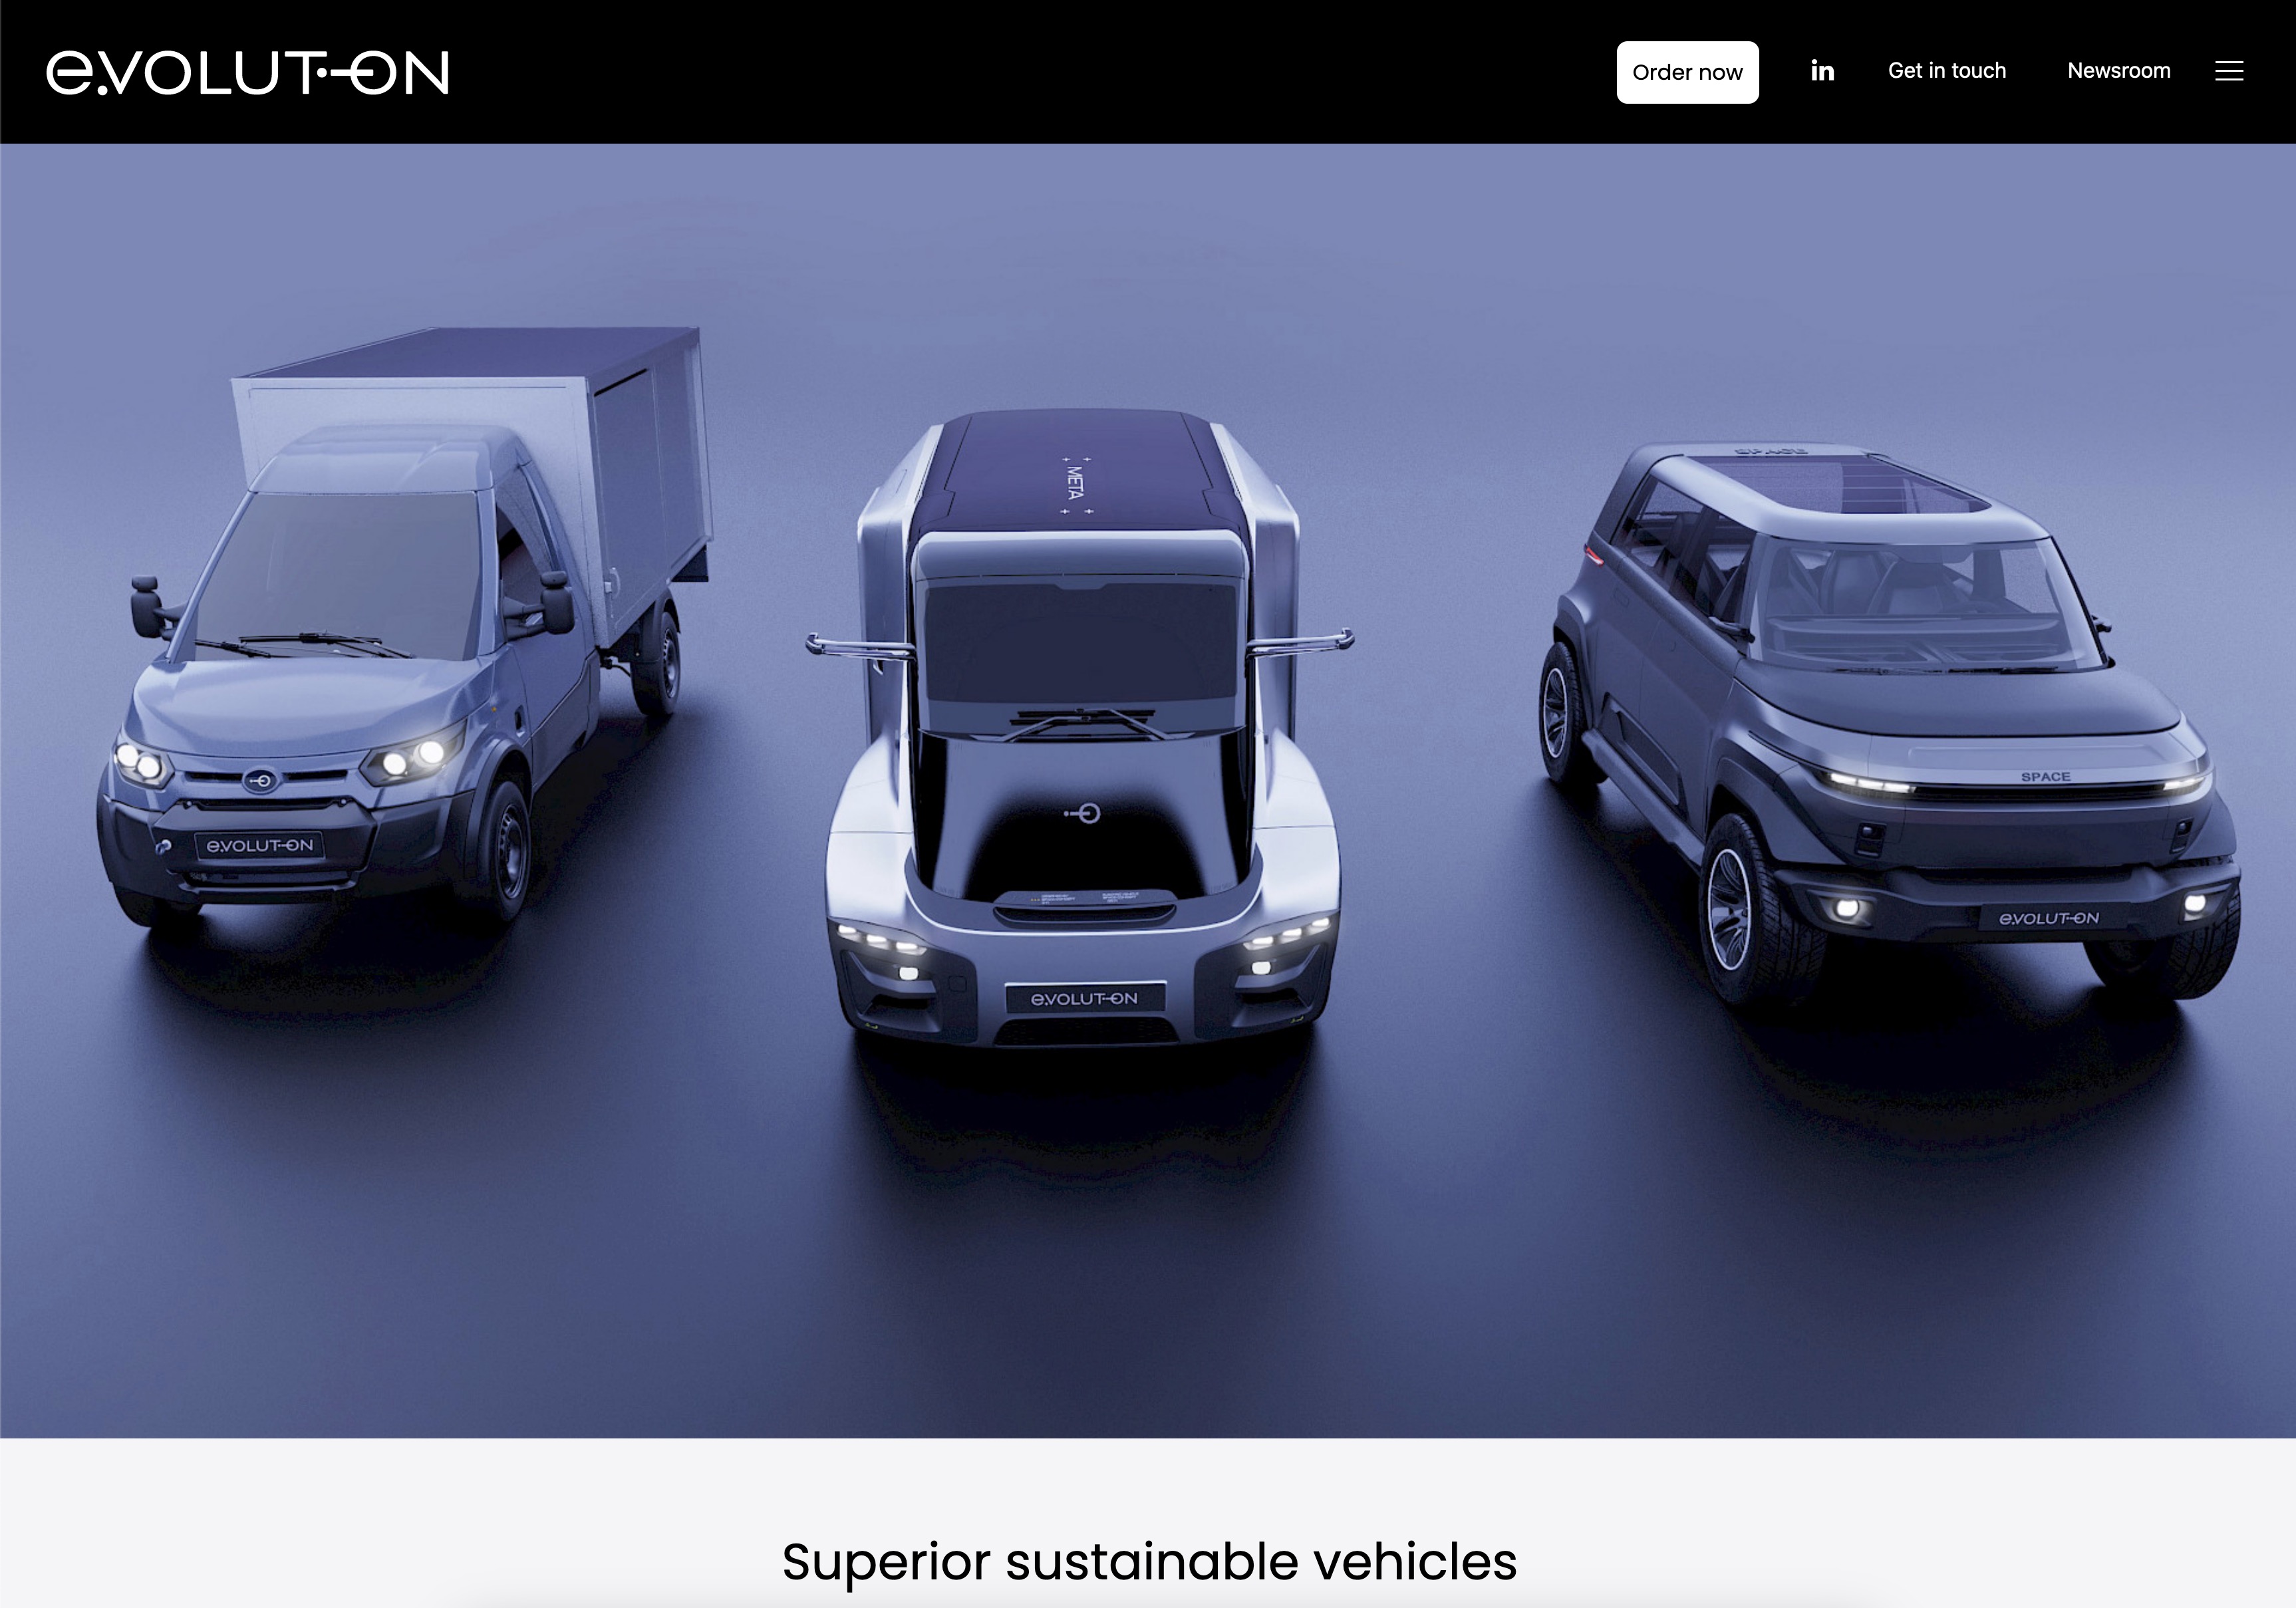 e.Volution GmbH - Superior sustainable vehicles